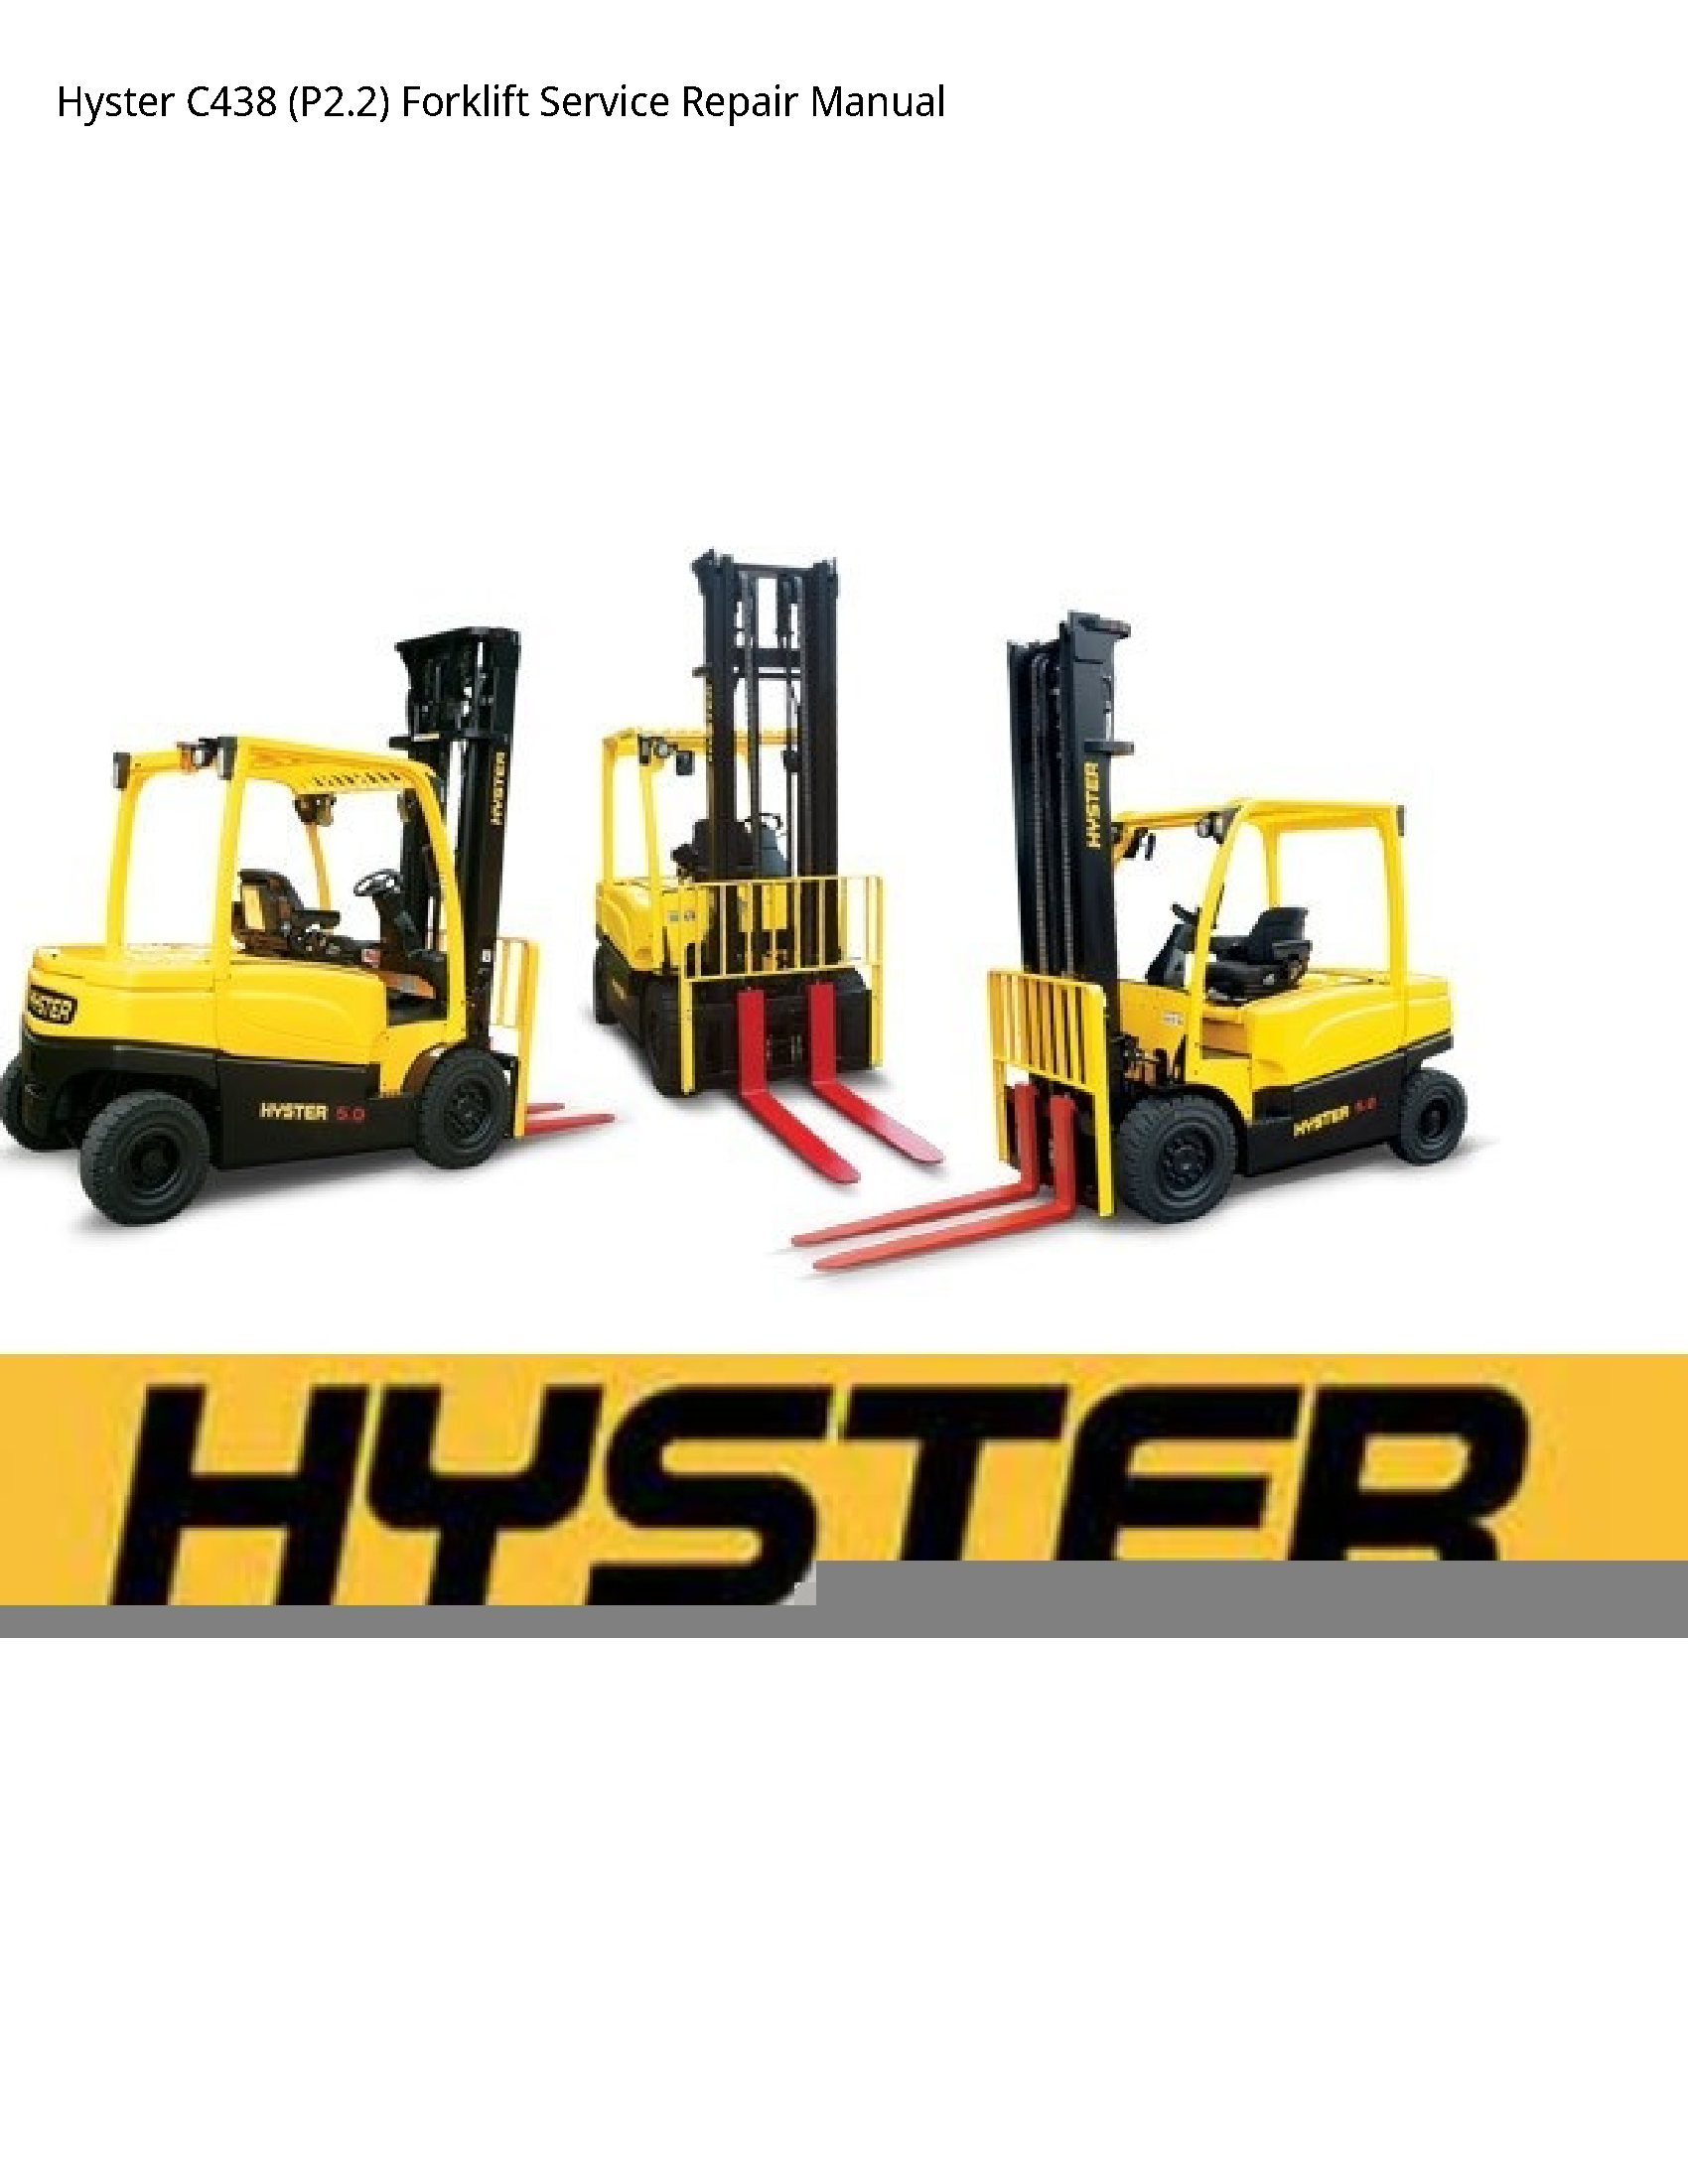 Hyster C438 Forklift manual